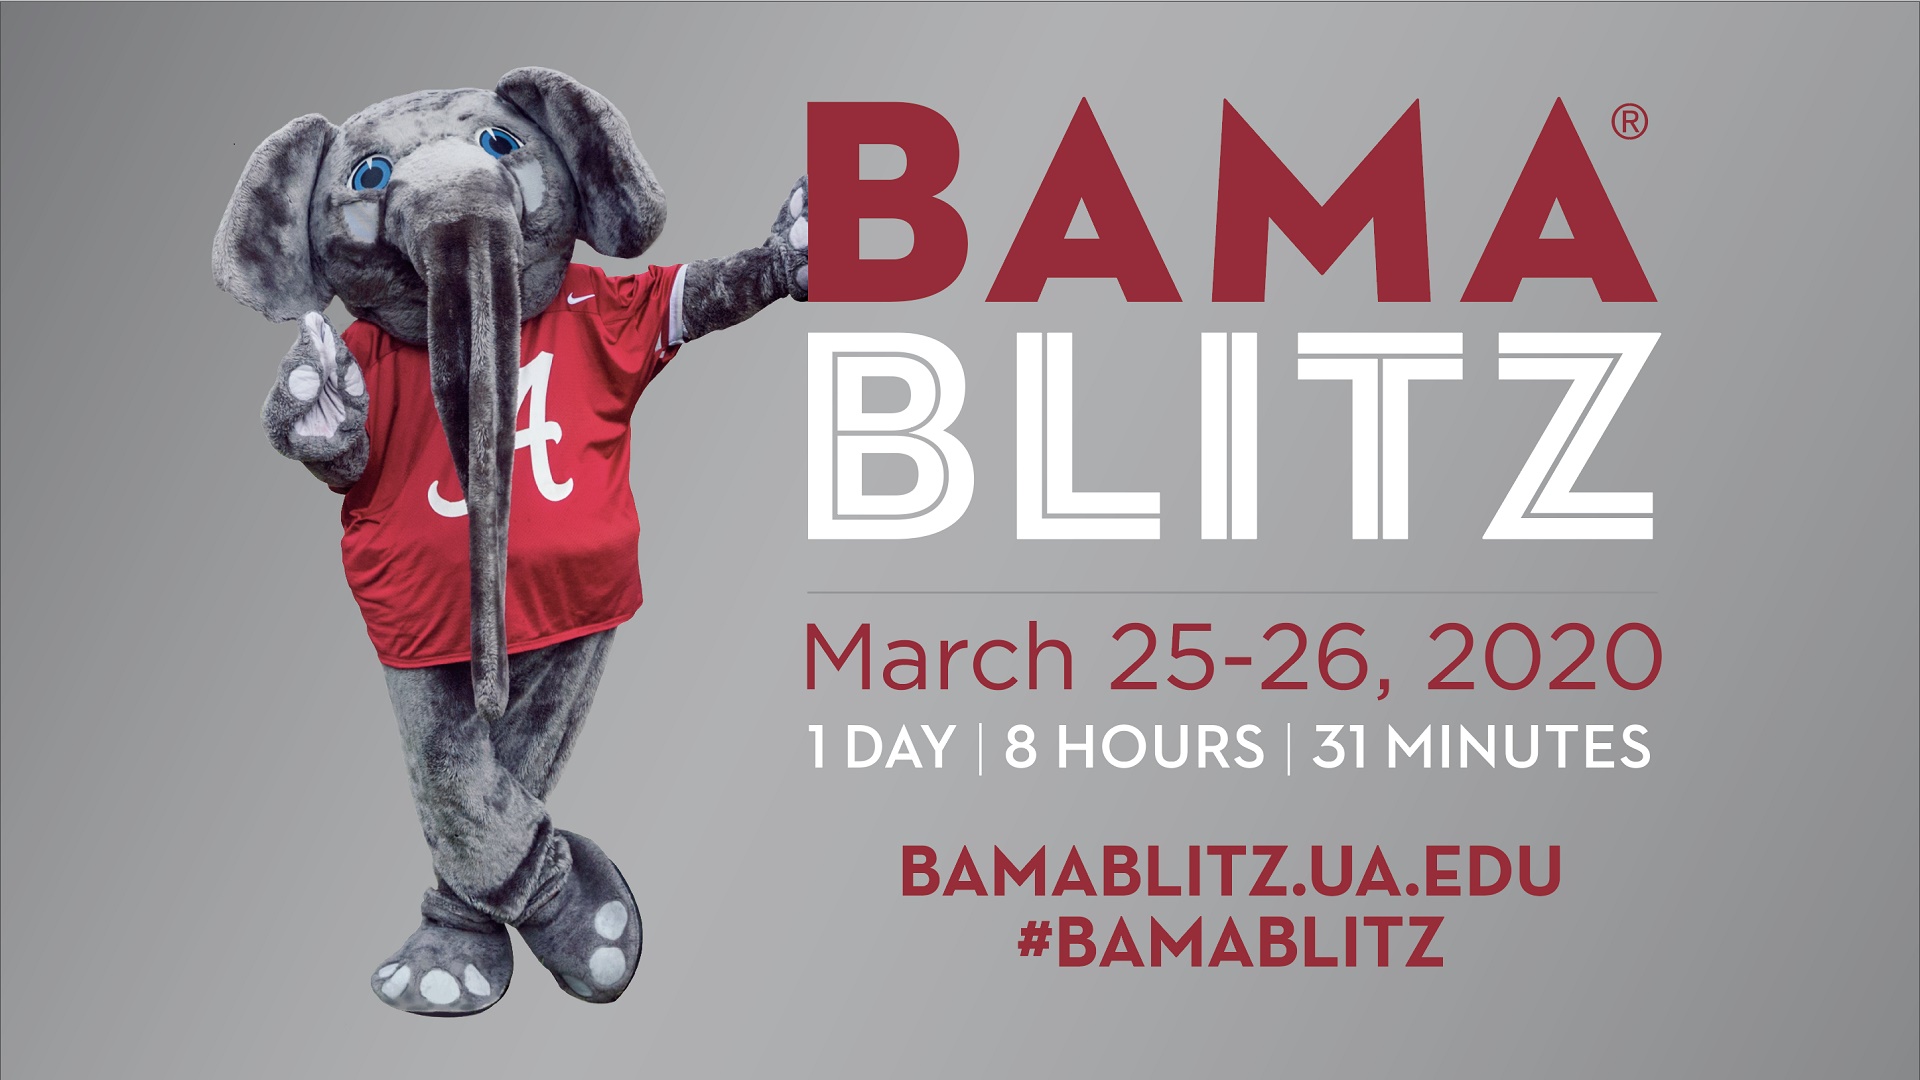 A image of UA's mascot, Big Al, standing beside a Bama Blitz logo.